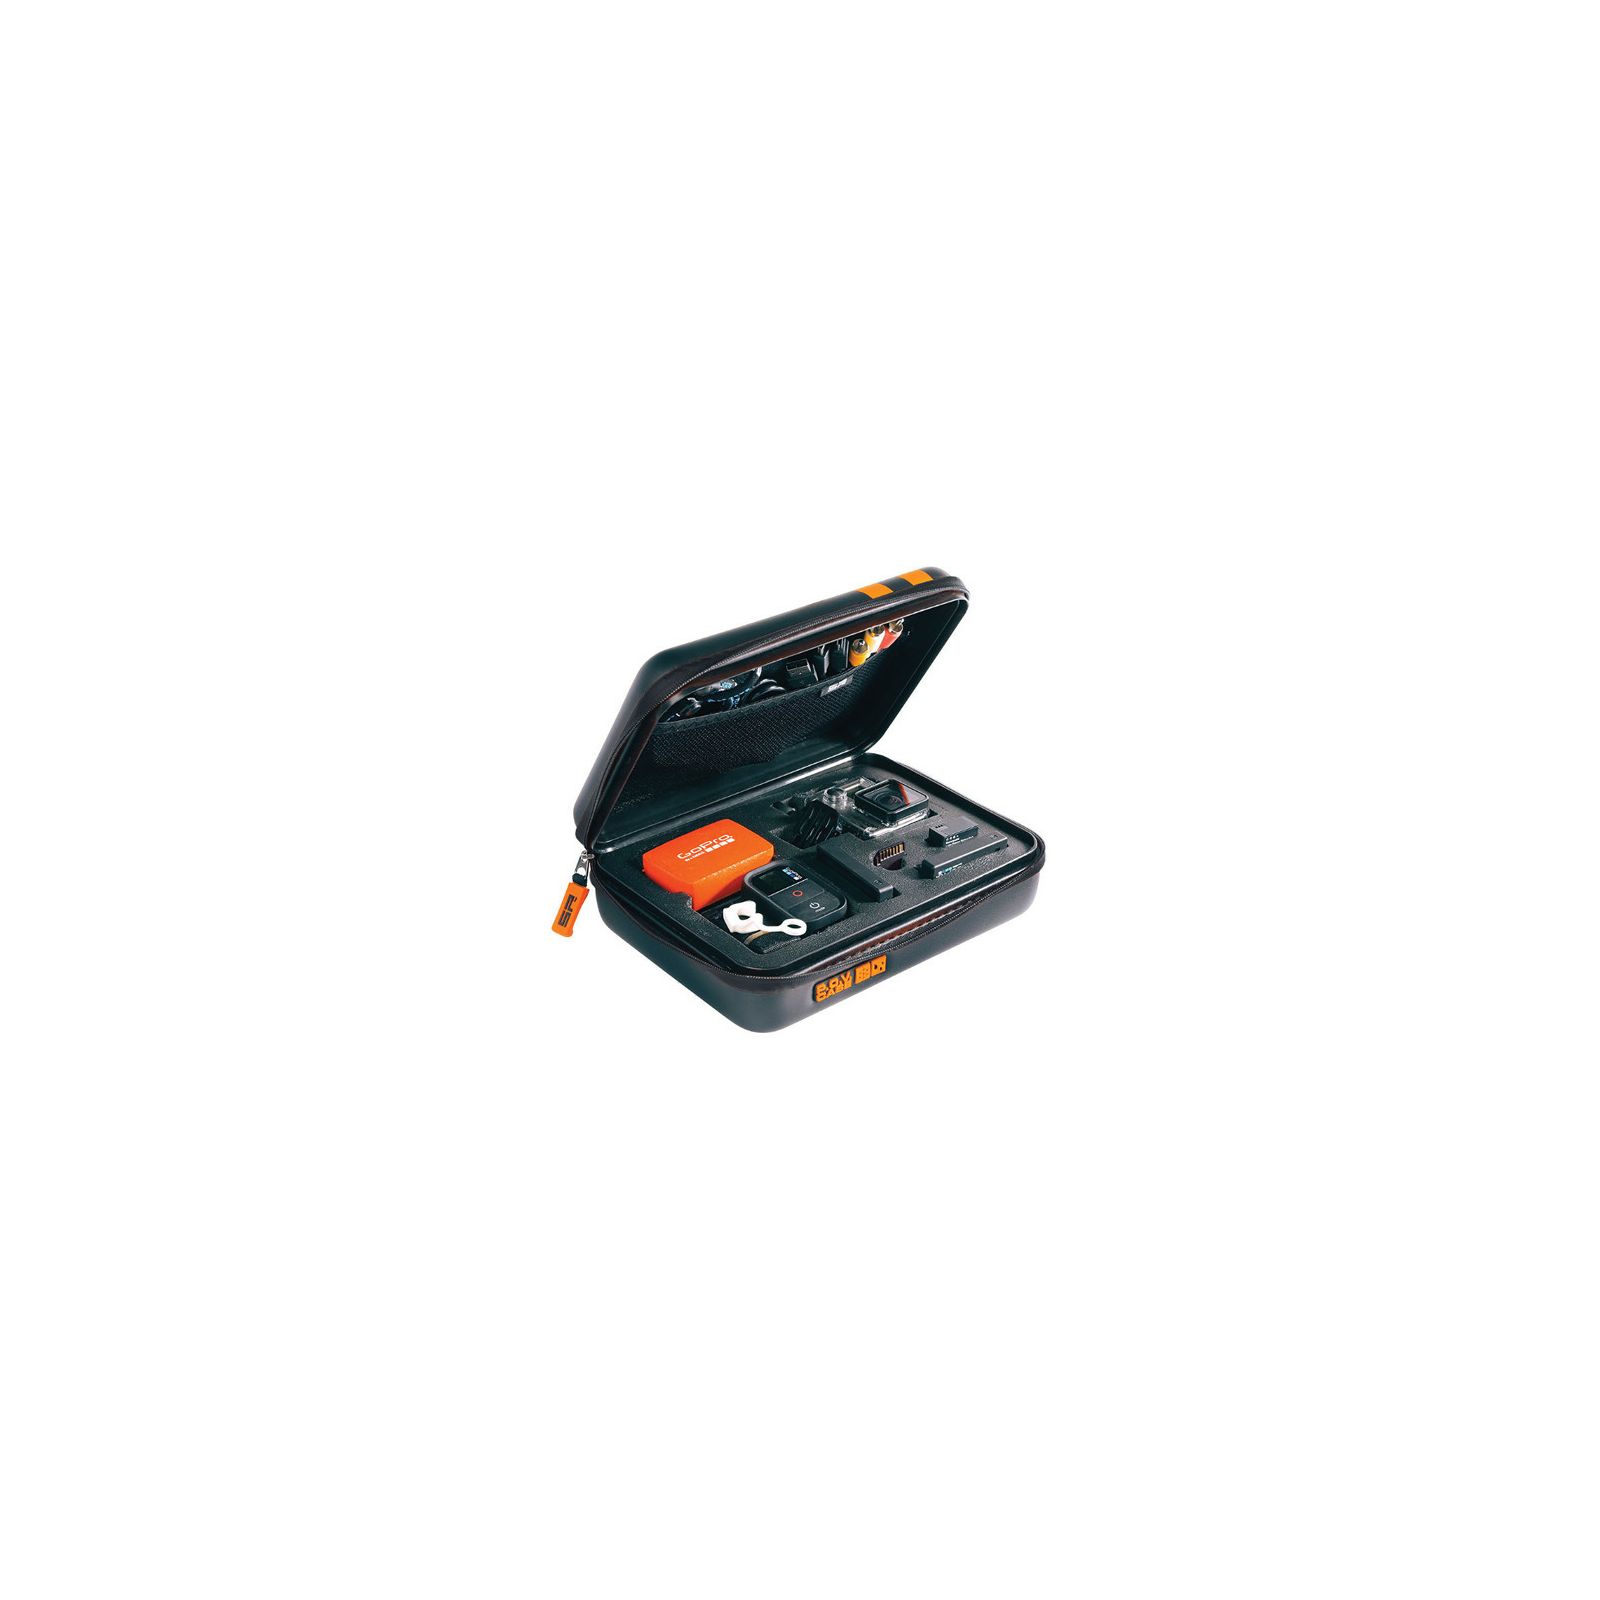 SP Gadgets SP POV AQUA Case GoPro-Edition 3.0  black size small SKU 53080 Water-resistant cases